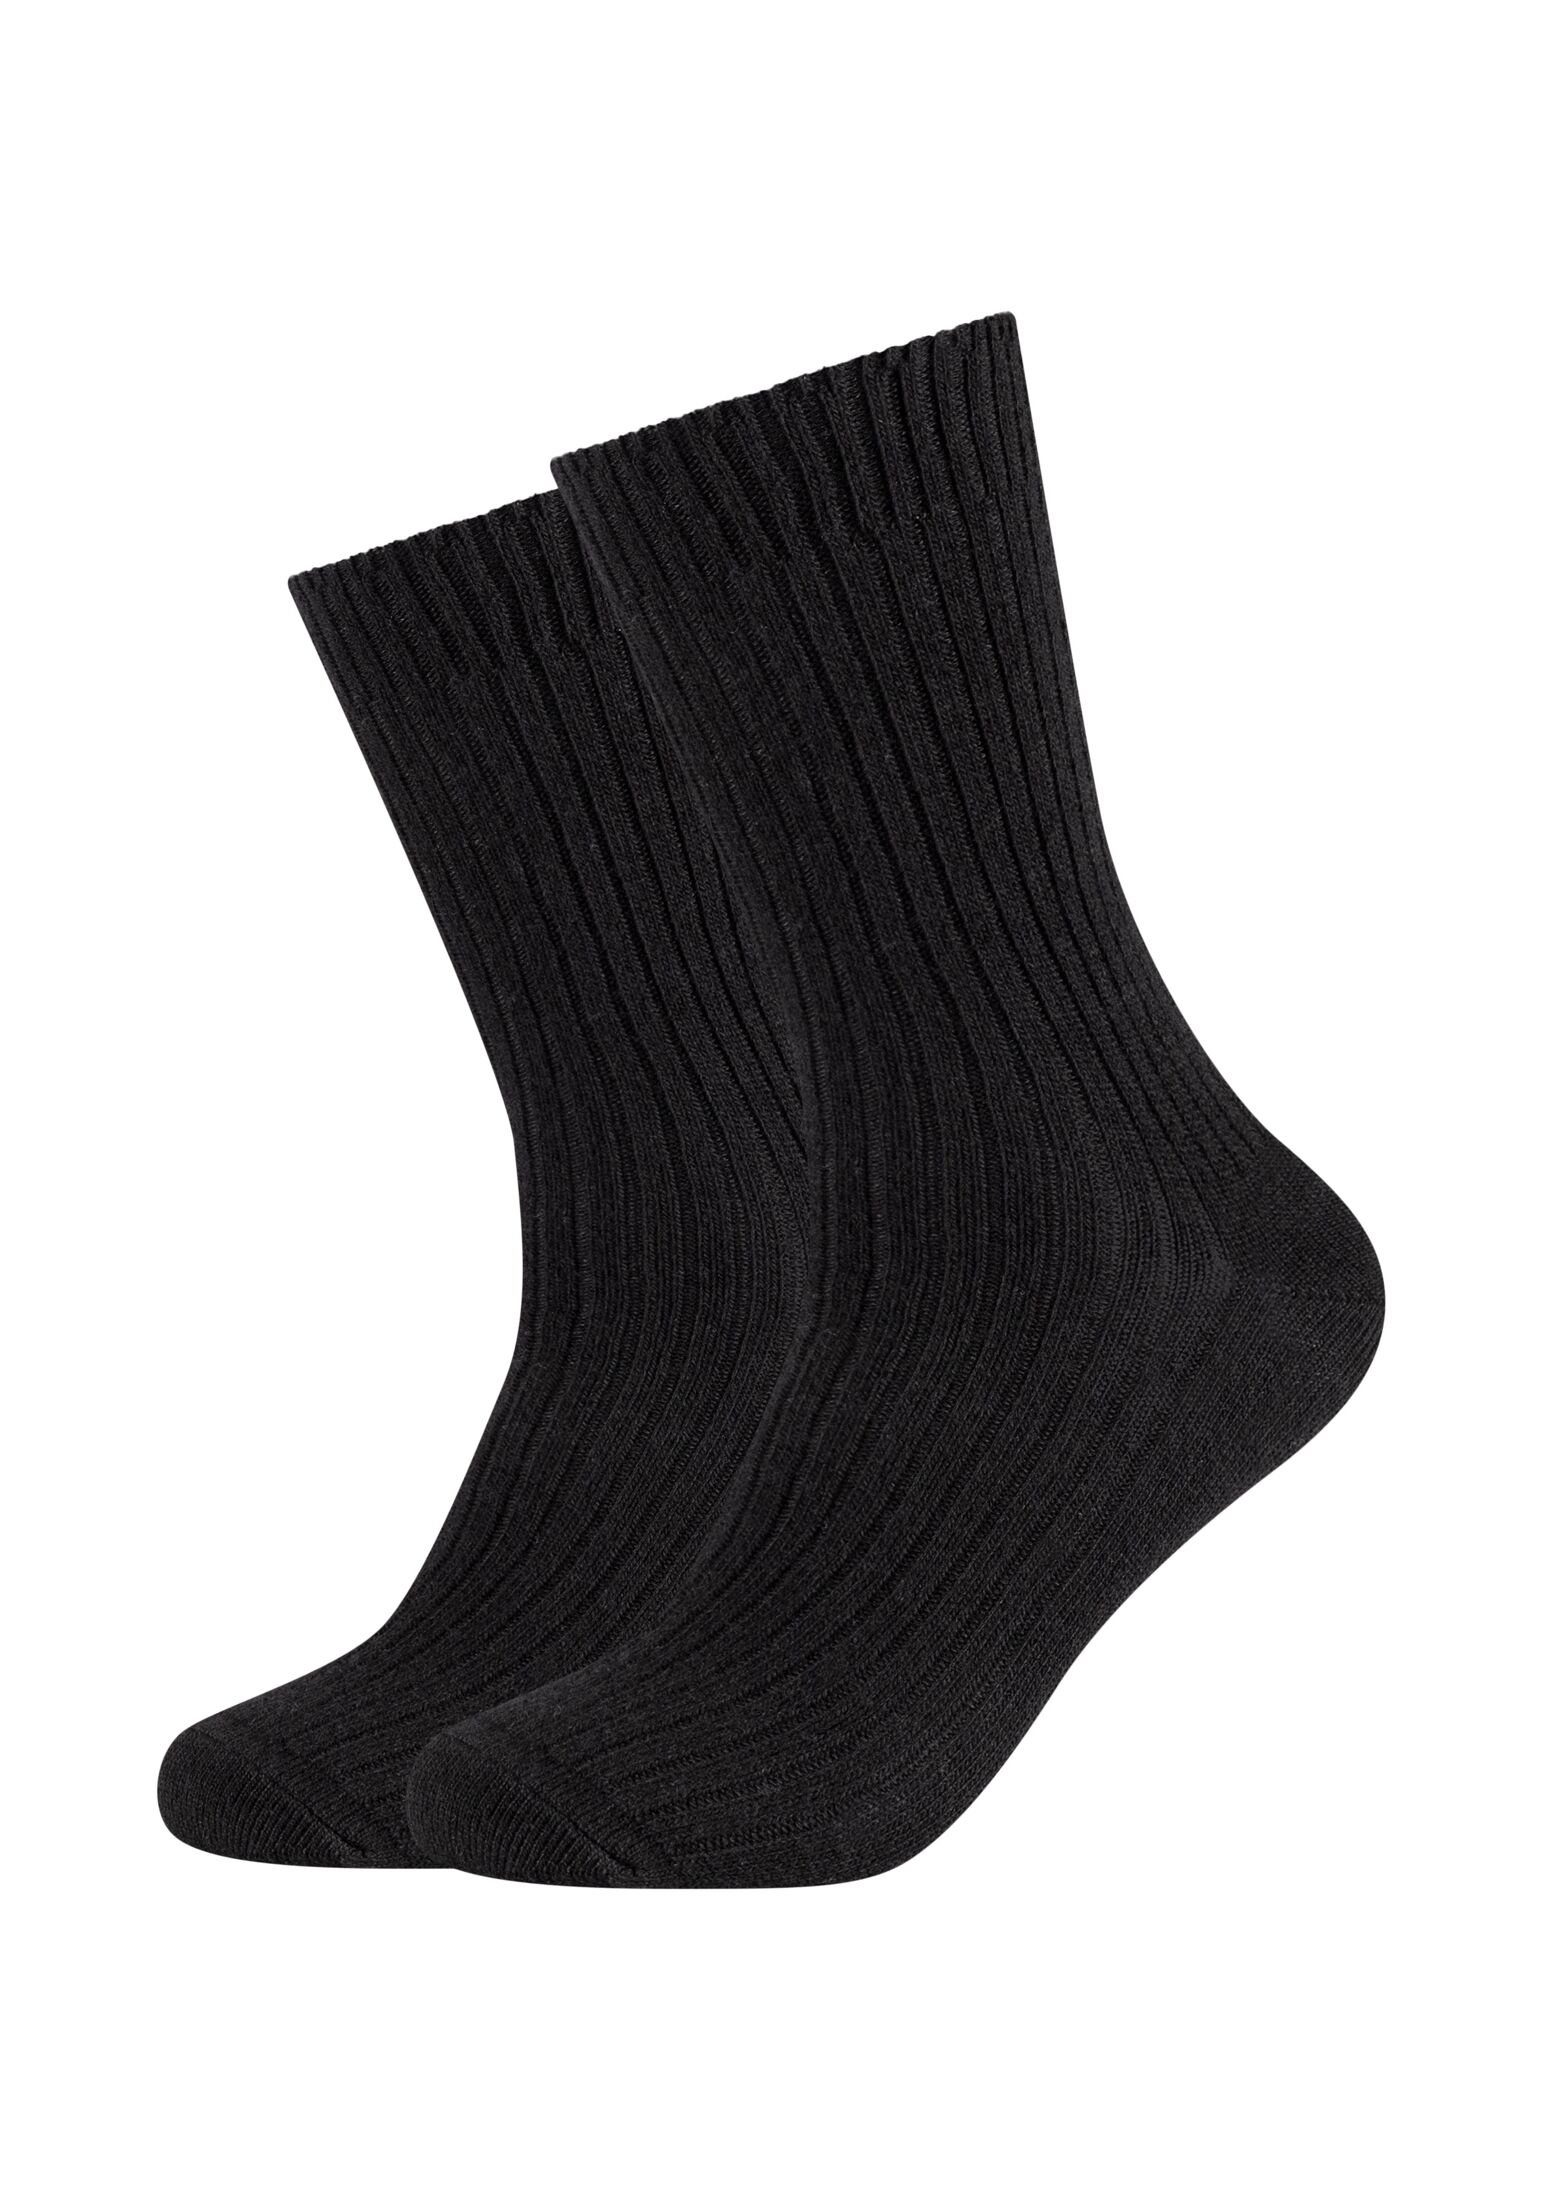 Versprechen höchster Qualität s.Oliver Socken Socken 2er Pack black